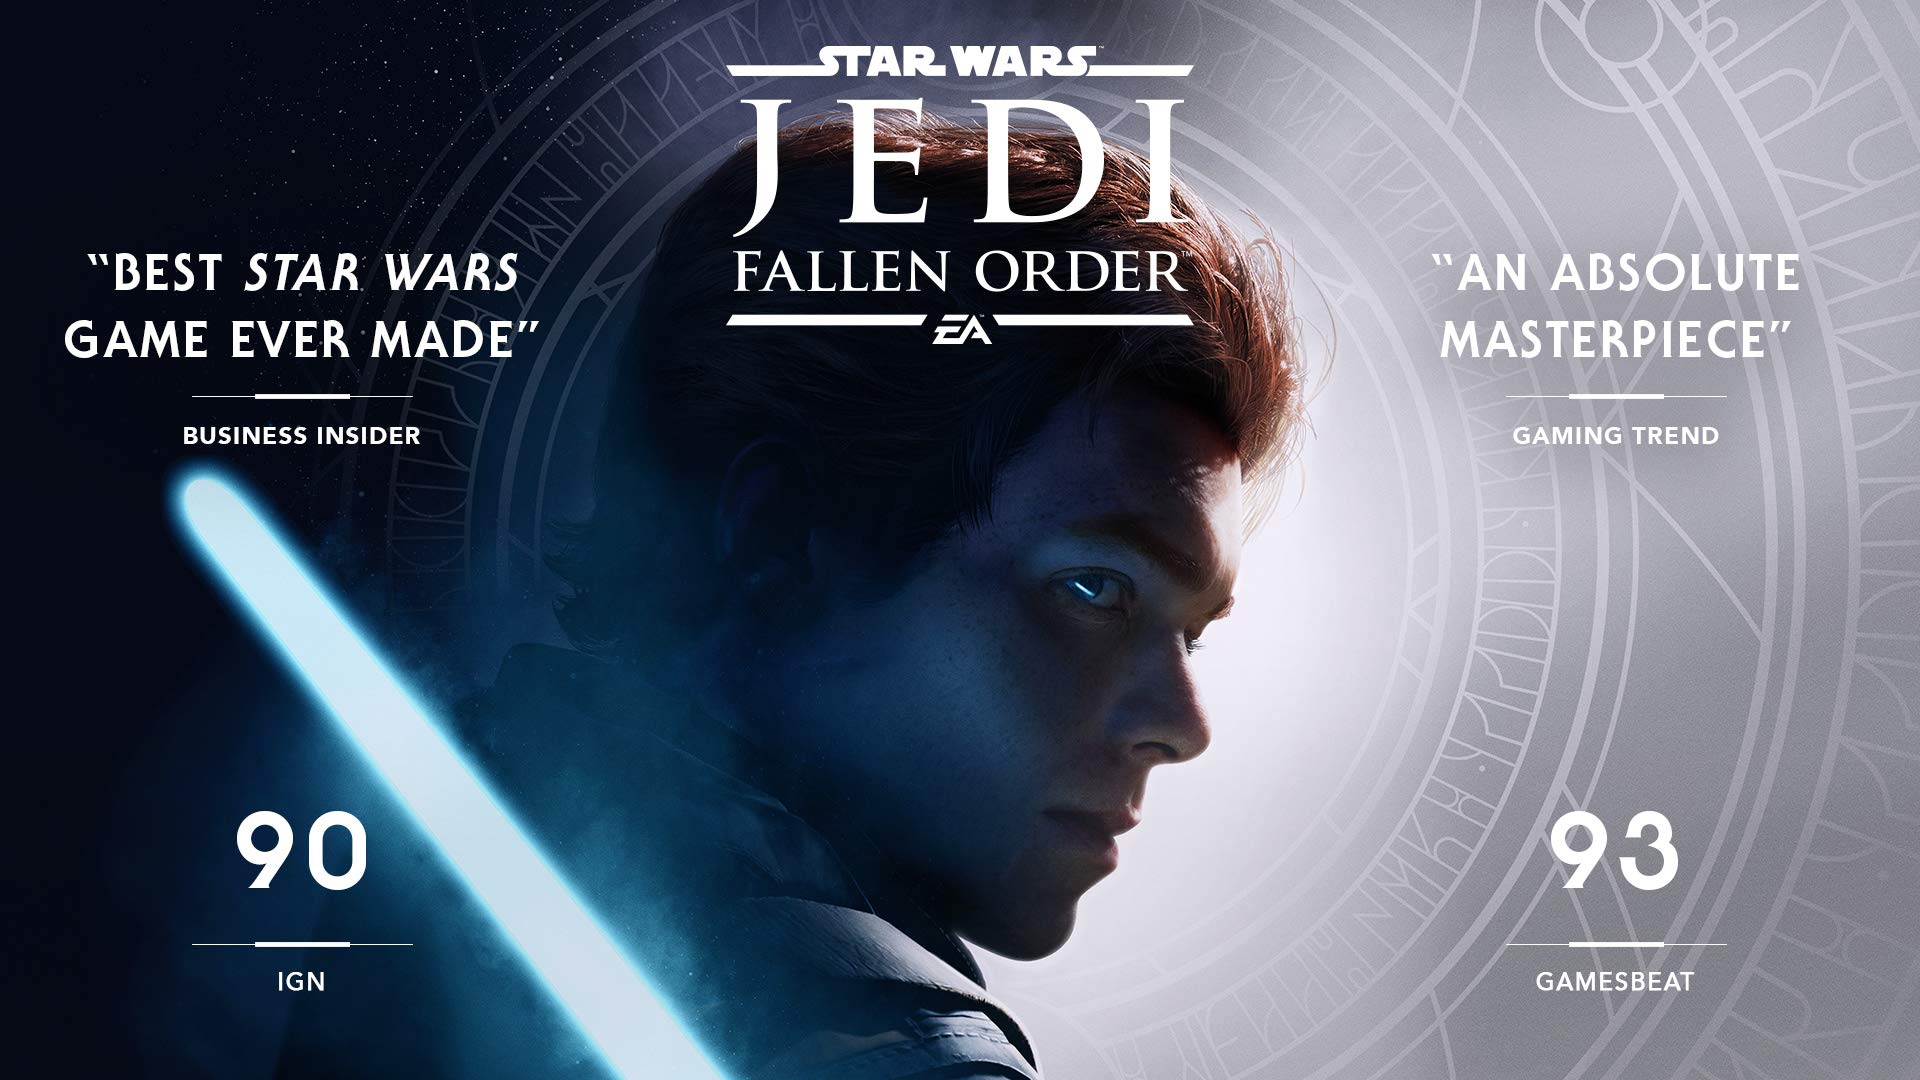 Star Wars Jedi: Fallen Order Deluxe Edition - PlayStation 4